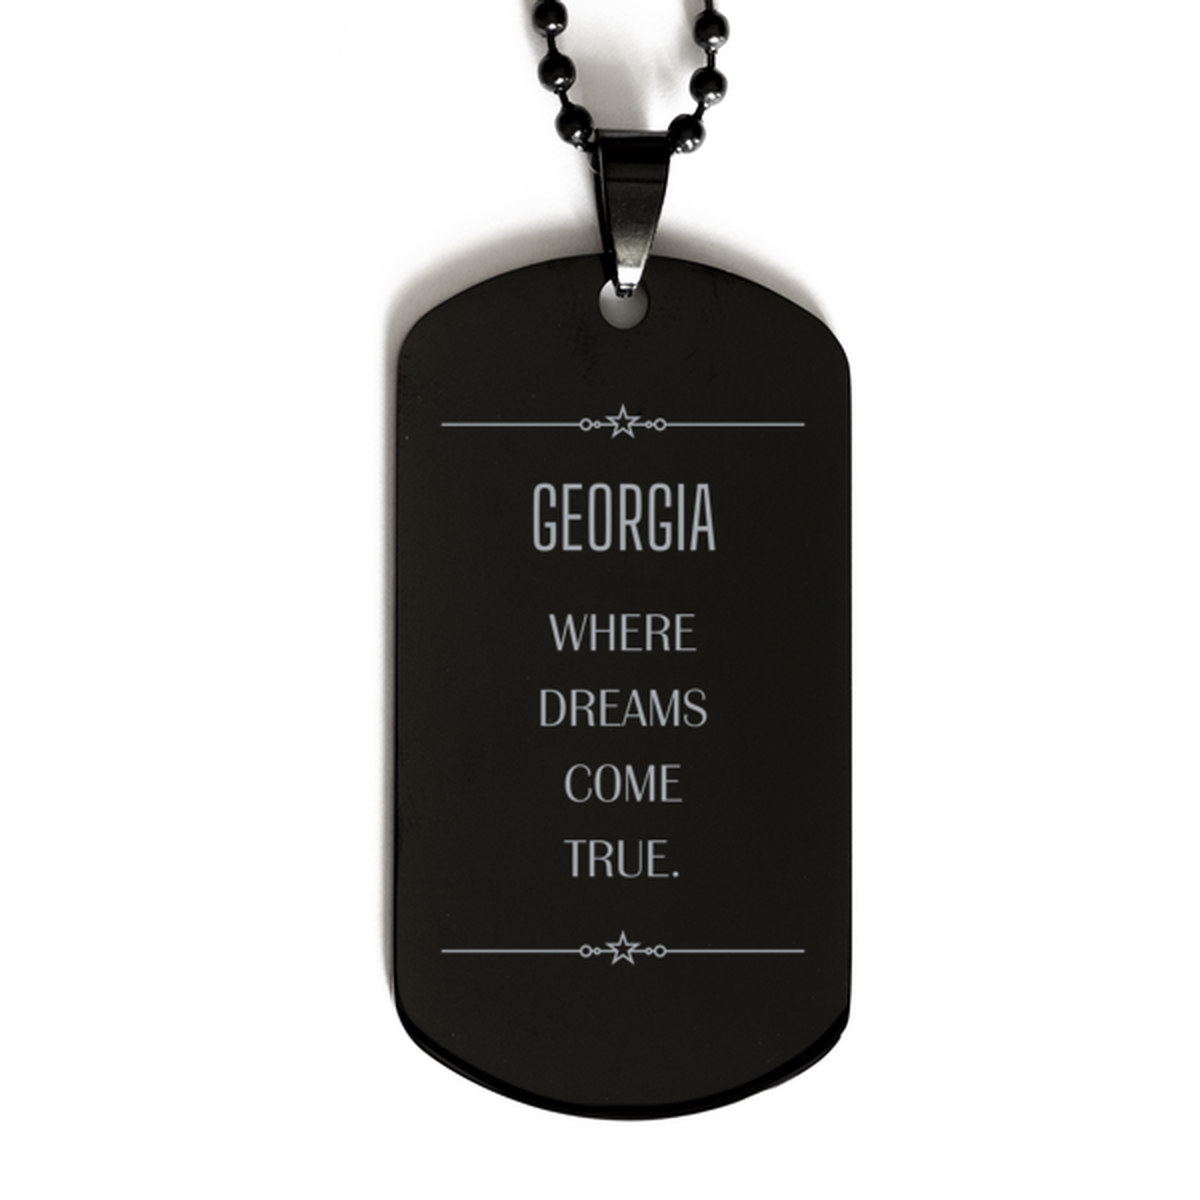 Love Georgia State Black Dog Tag, Georgia Where dreams come true, Birthday Inspirational Gifts For Georgia Men, Women, Friends